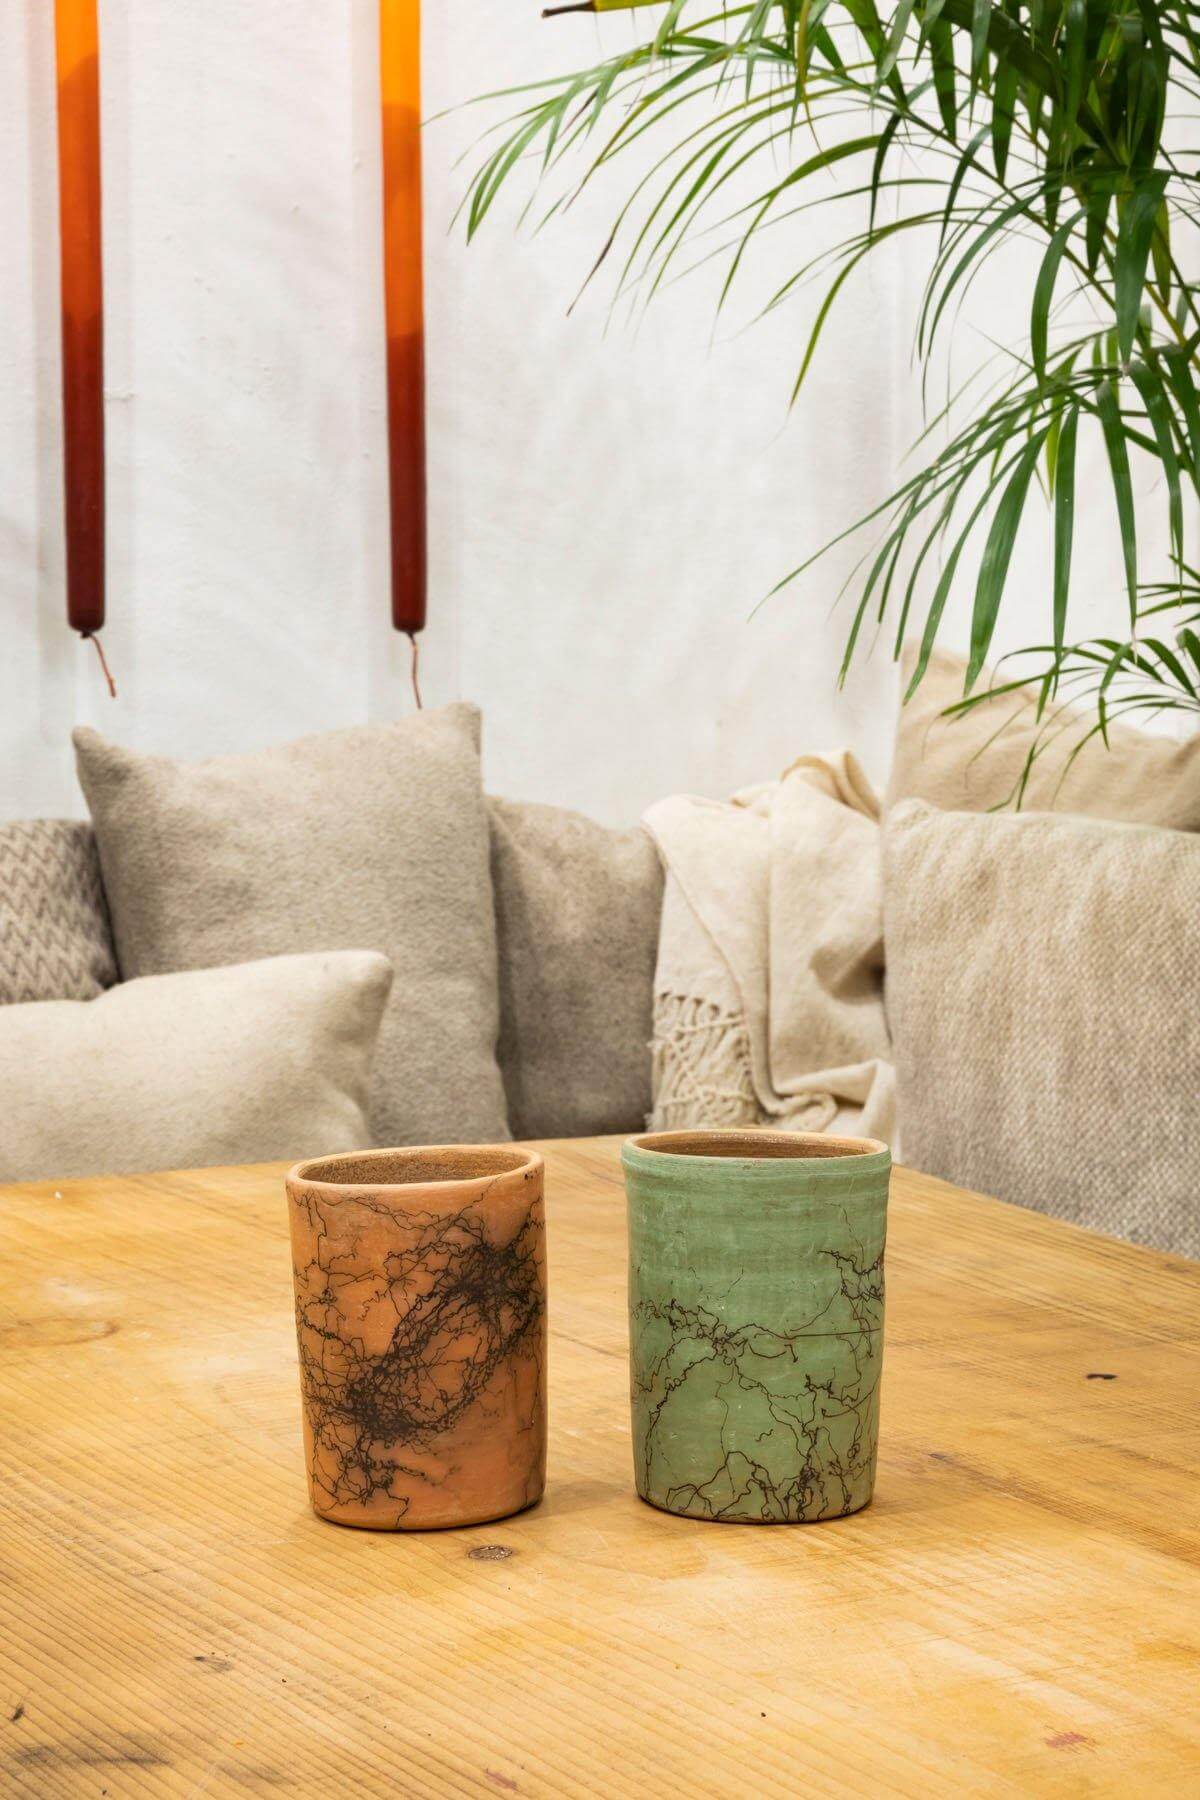 Raku Ceramic Mug on display, highlighting its use as a functional cup or vase.